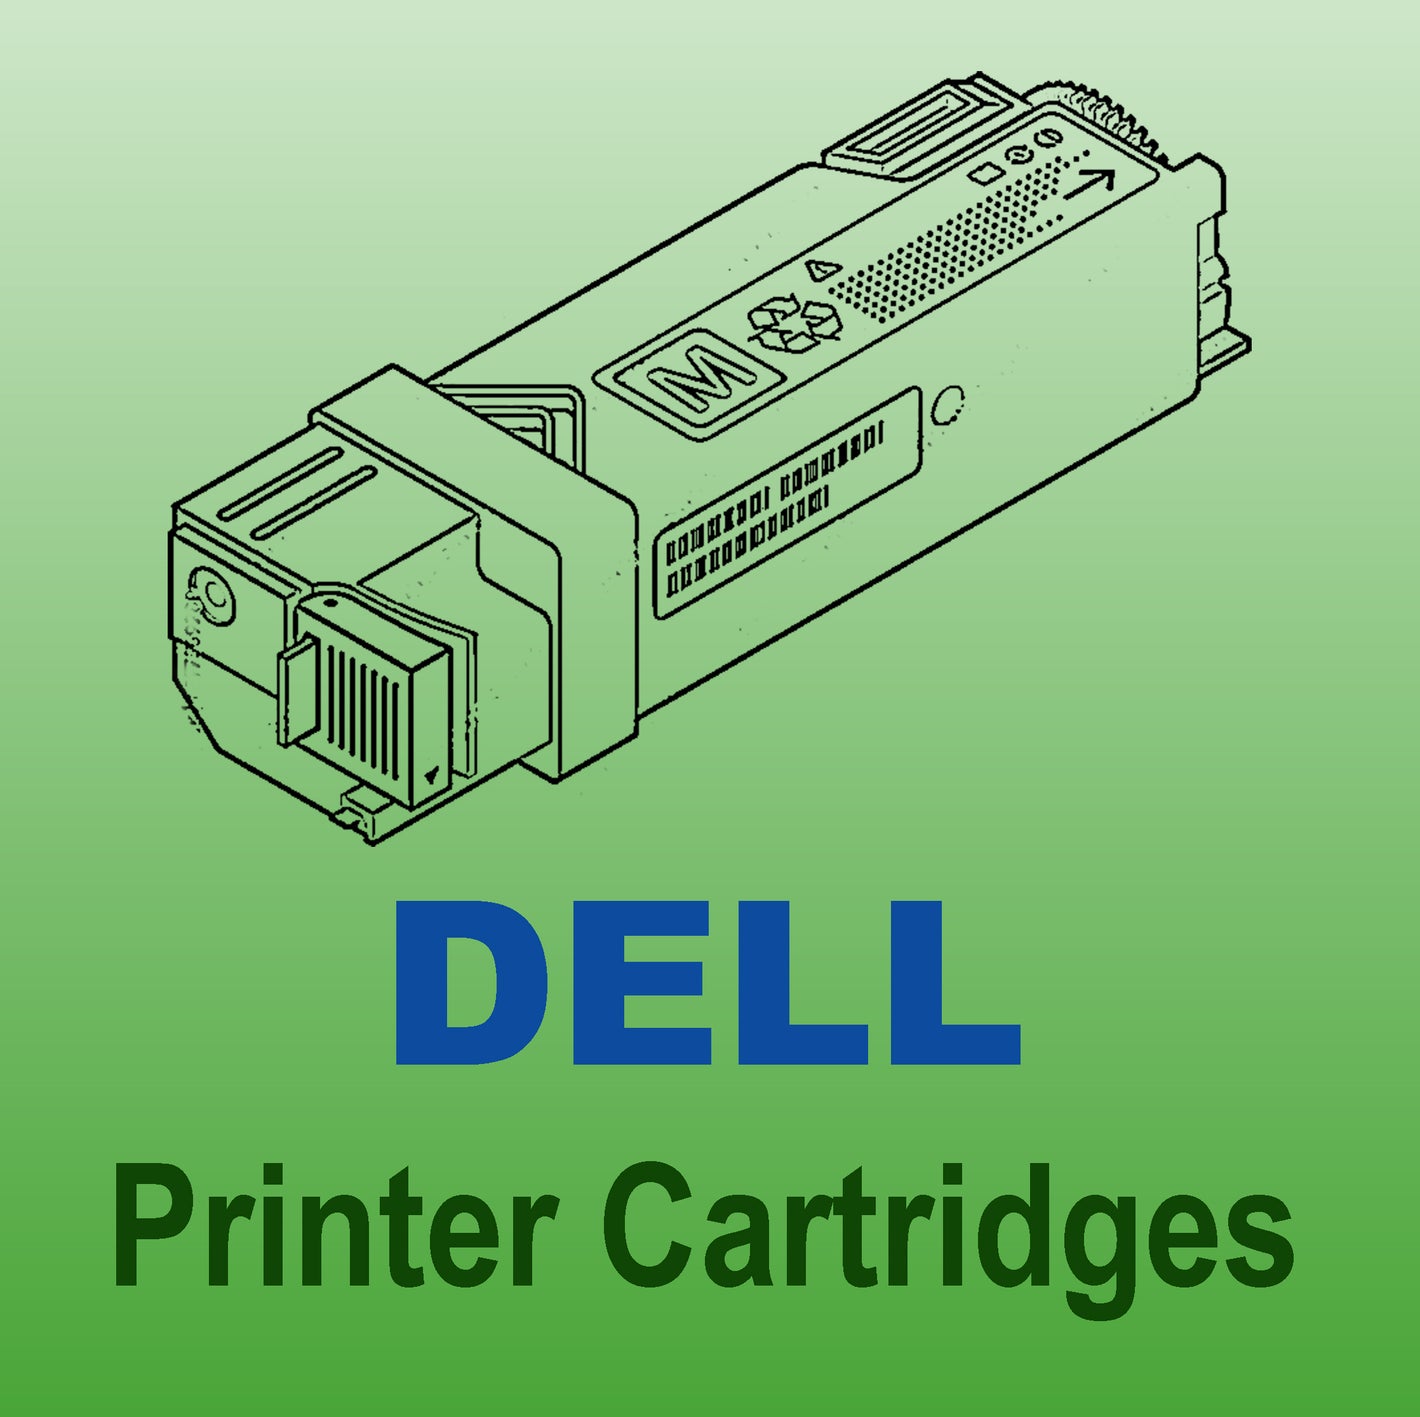 Dell Printer Cartridges